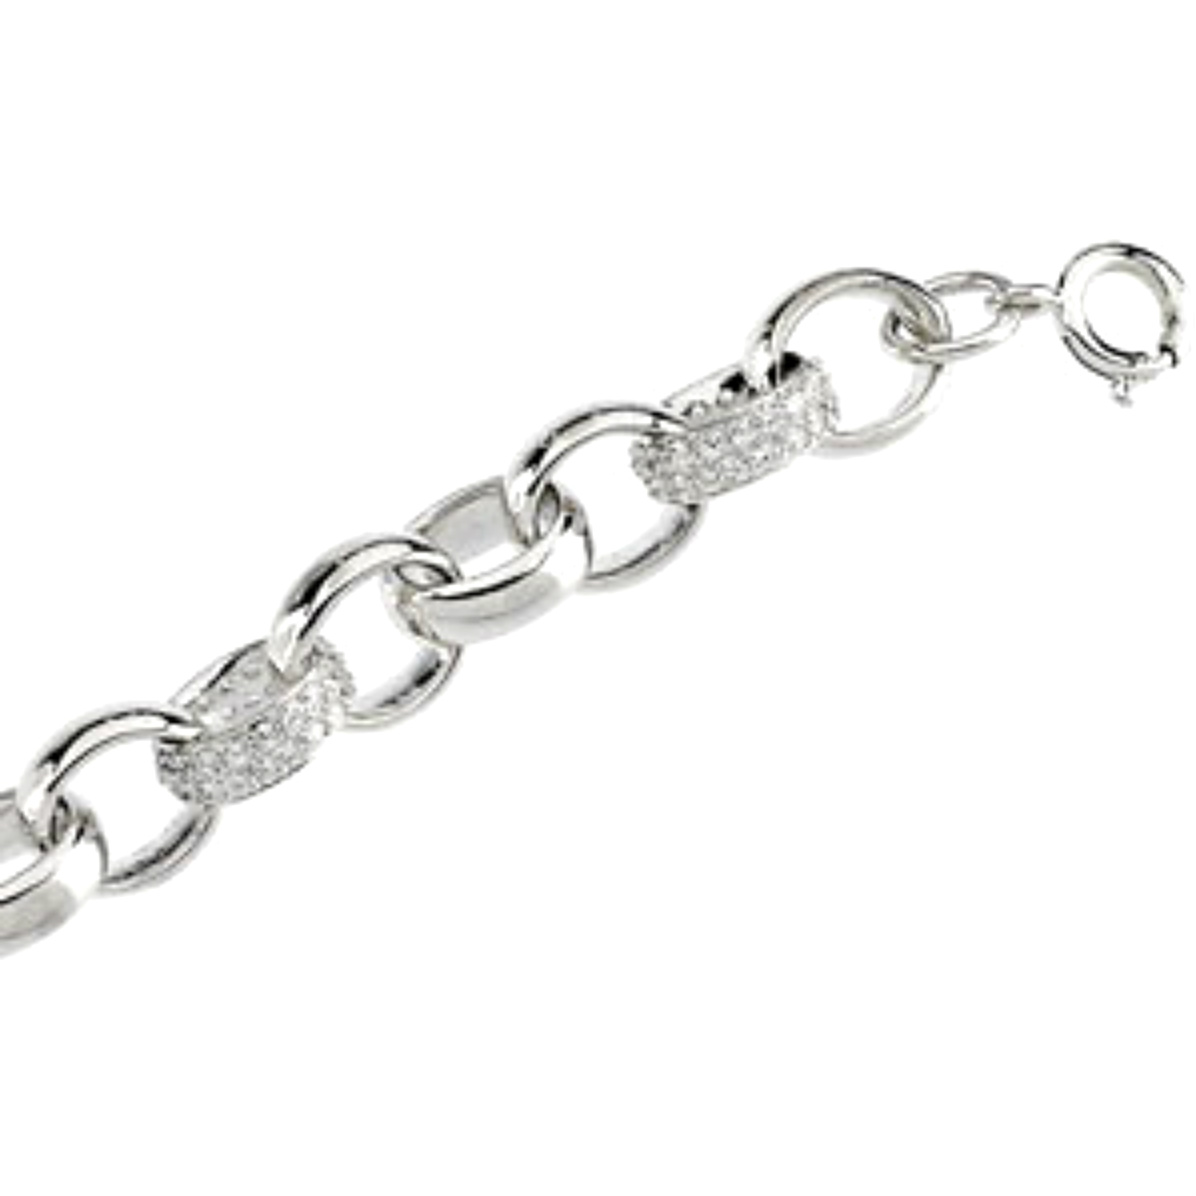 Classy Cubic Zirconia Line Bracelet, Sterling Silver, 7"